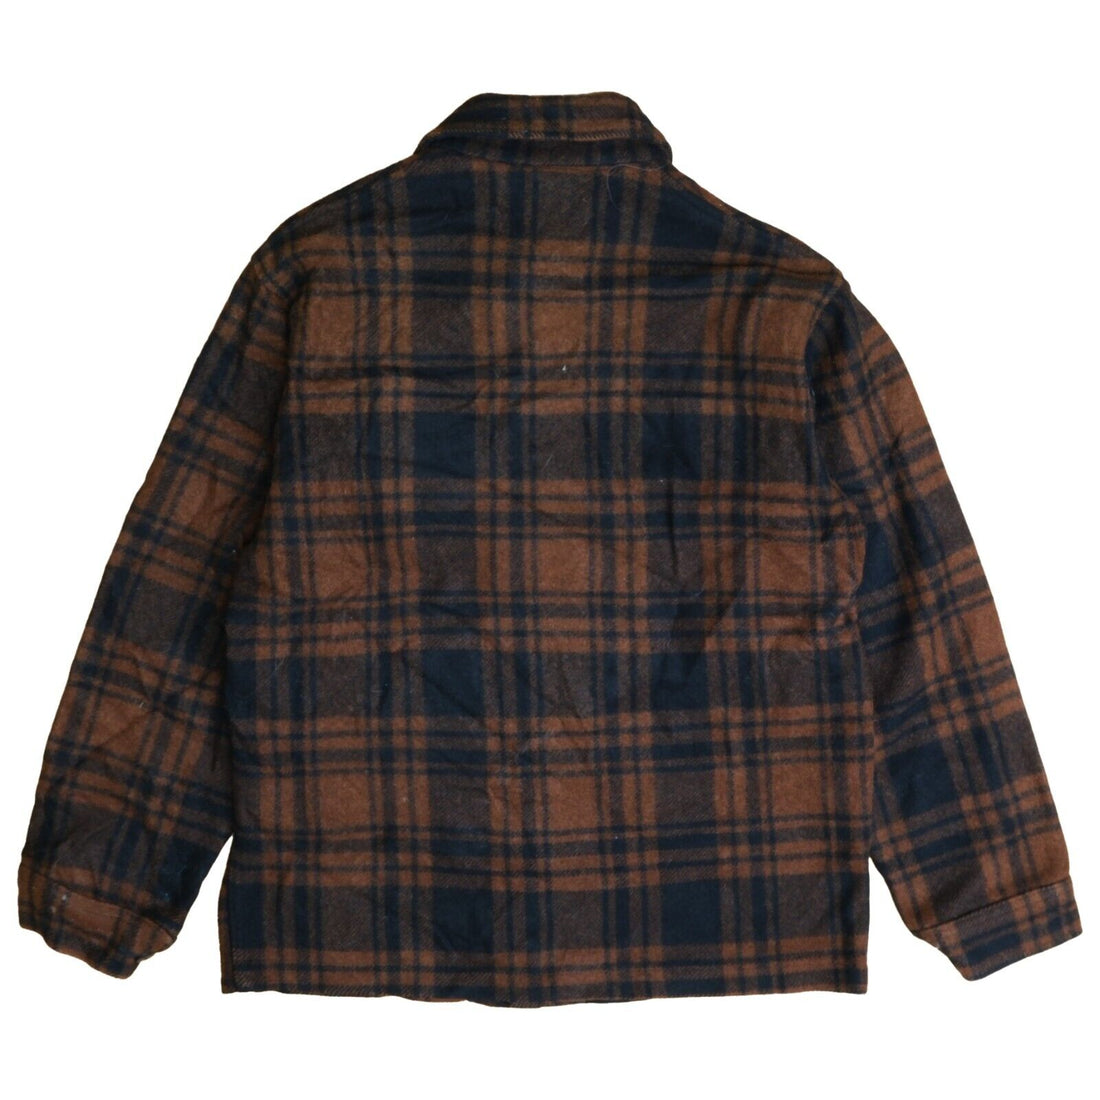 Vintage Pendleton Wool Button Up Shirt Jacket Coat Size Small Plaid